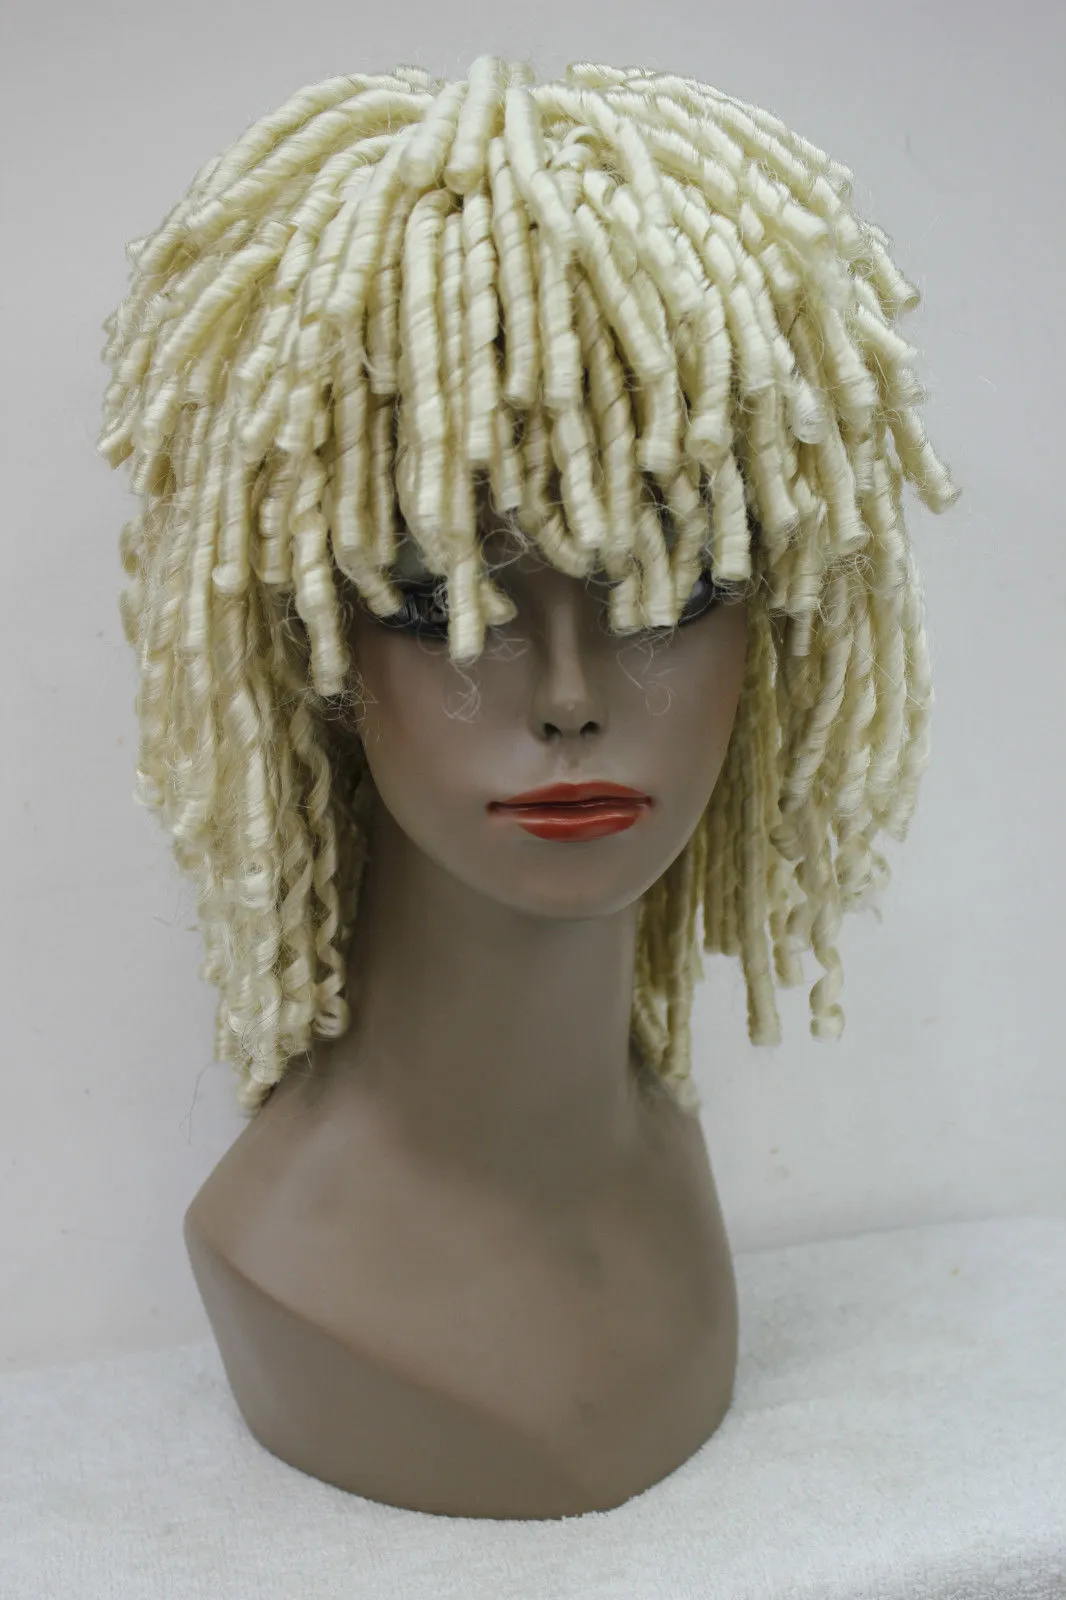 blonde african style women lady wigs DREADLOCKS RUUD GULLIT wig